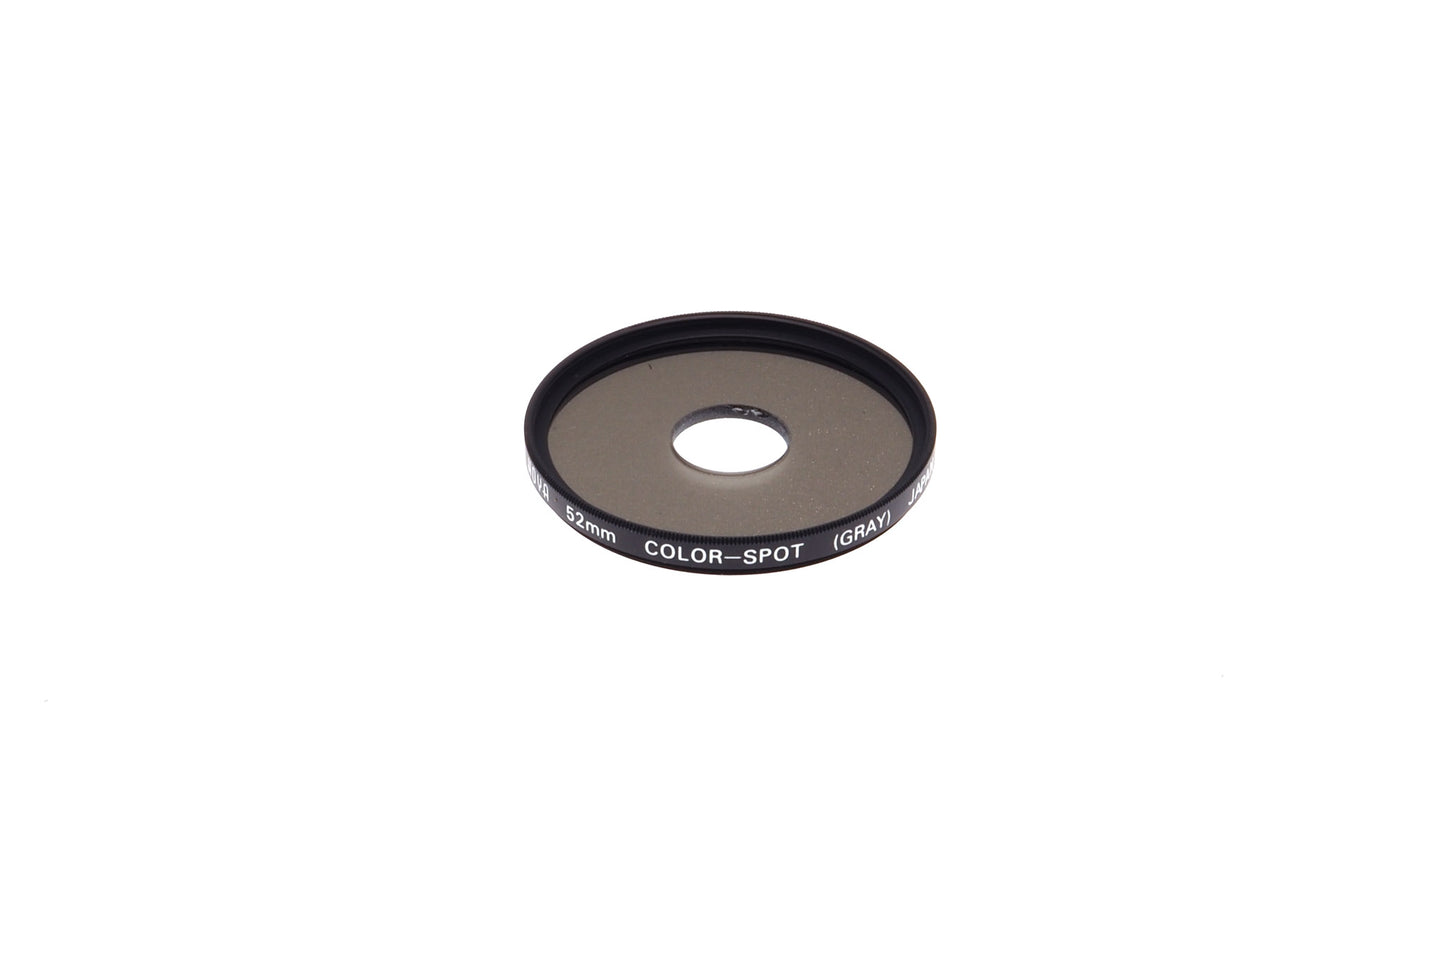 Hoya 52mm Color-Spot Filter (Gray) - Accessory